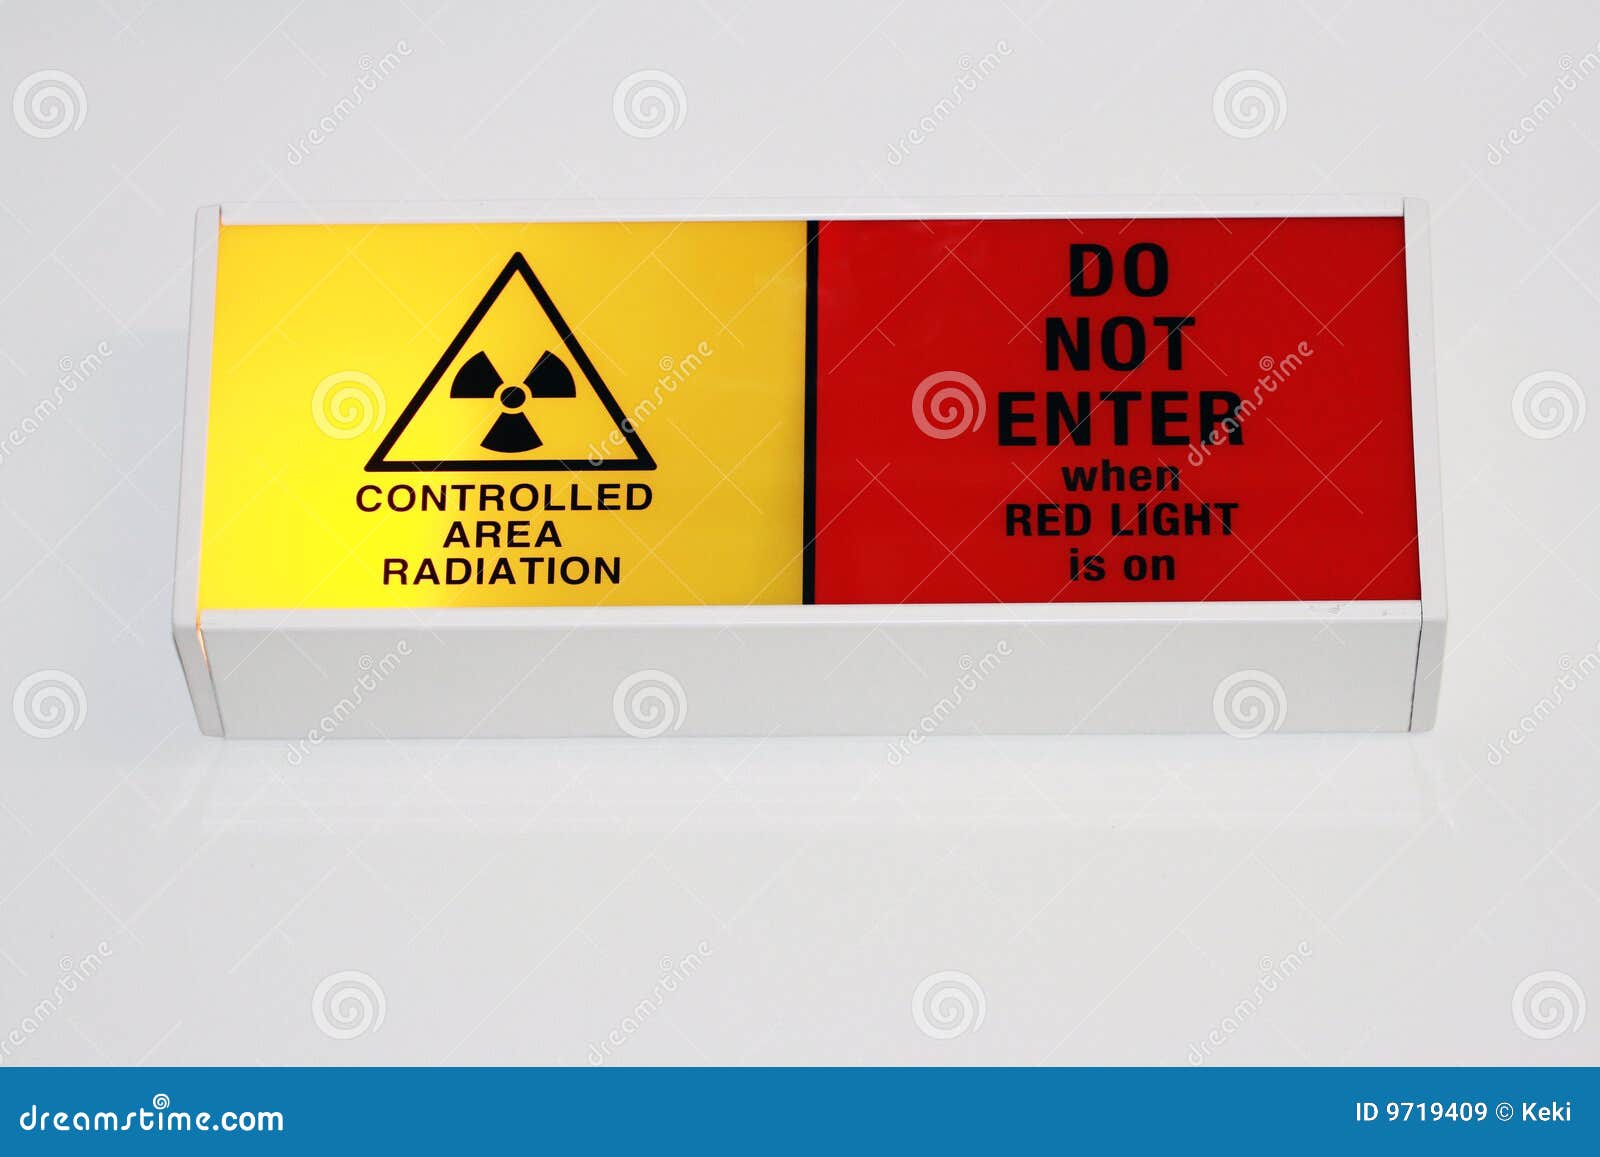 radiation warning 